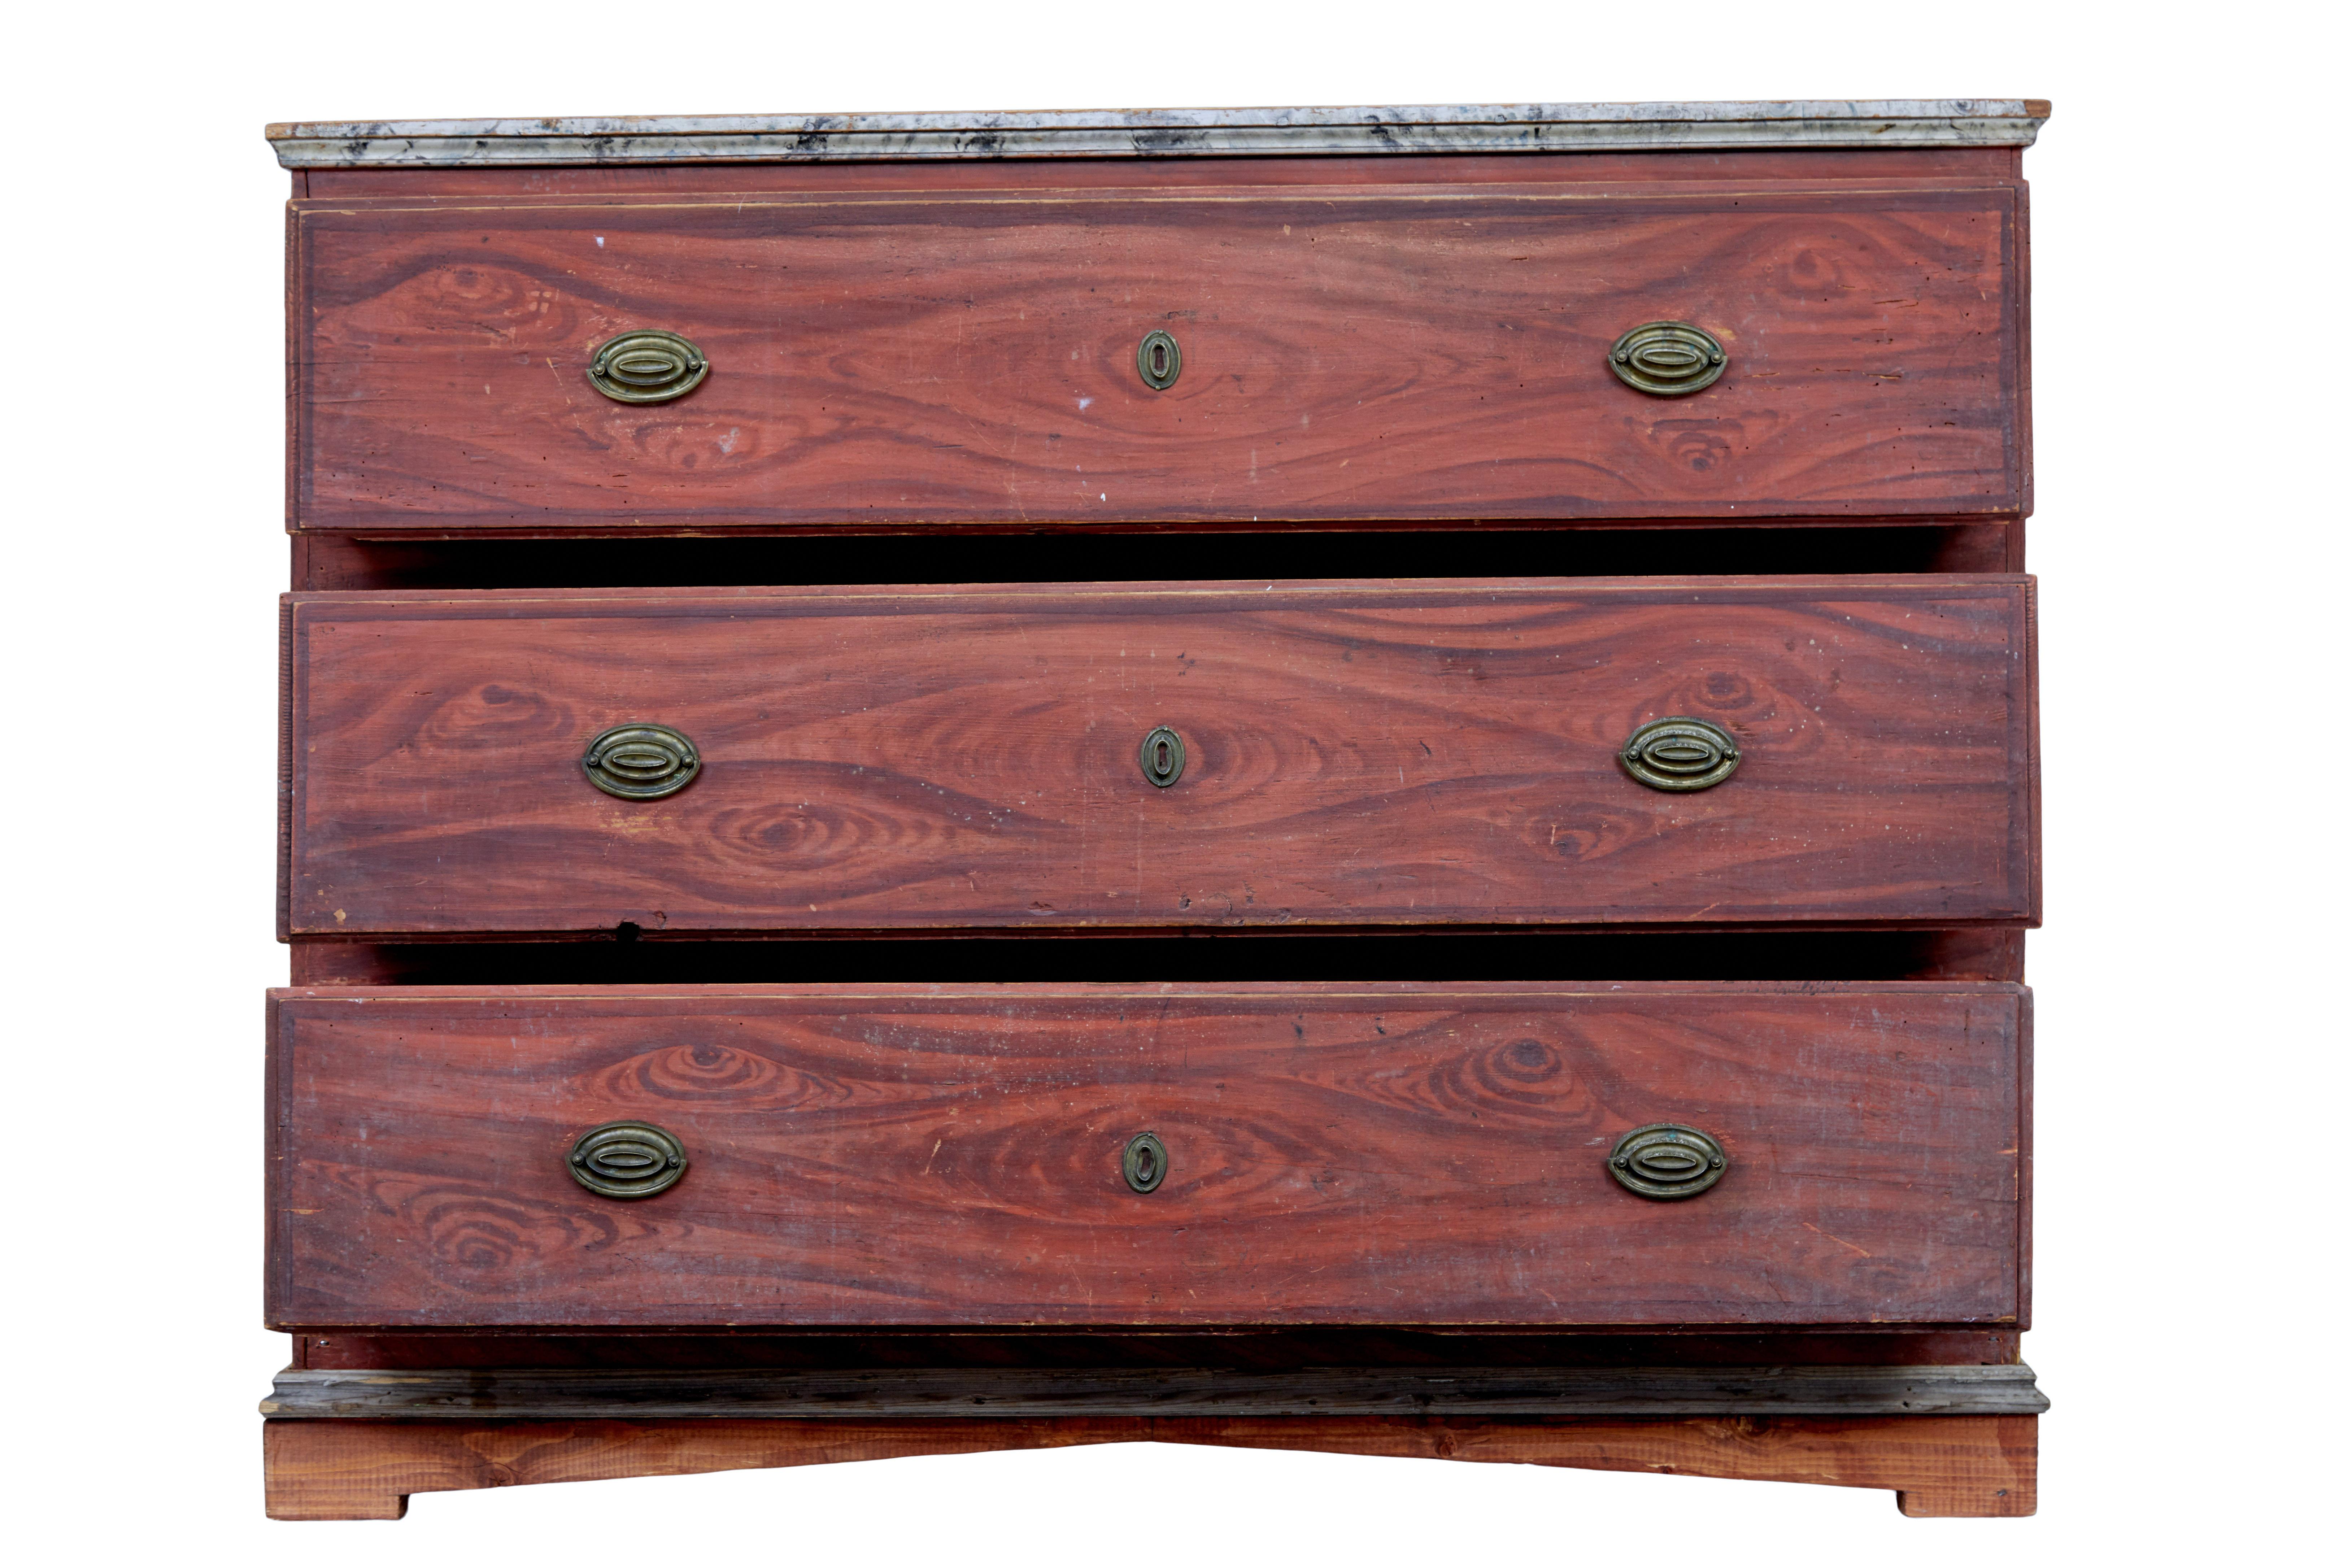 19th Century 19th century hand painted Swedish chest of drawers